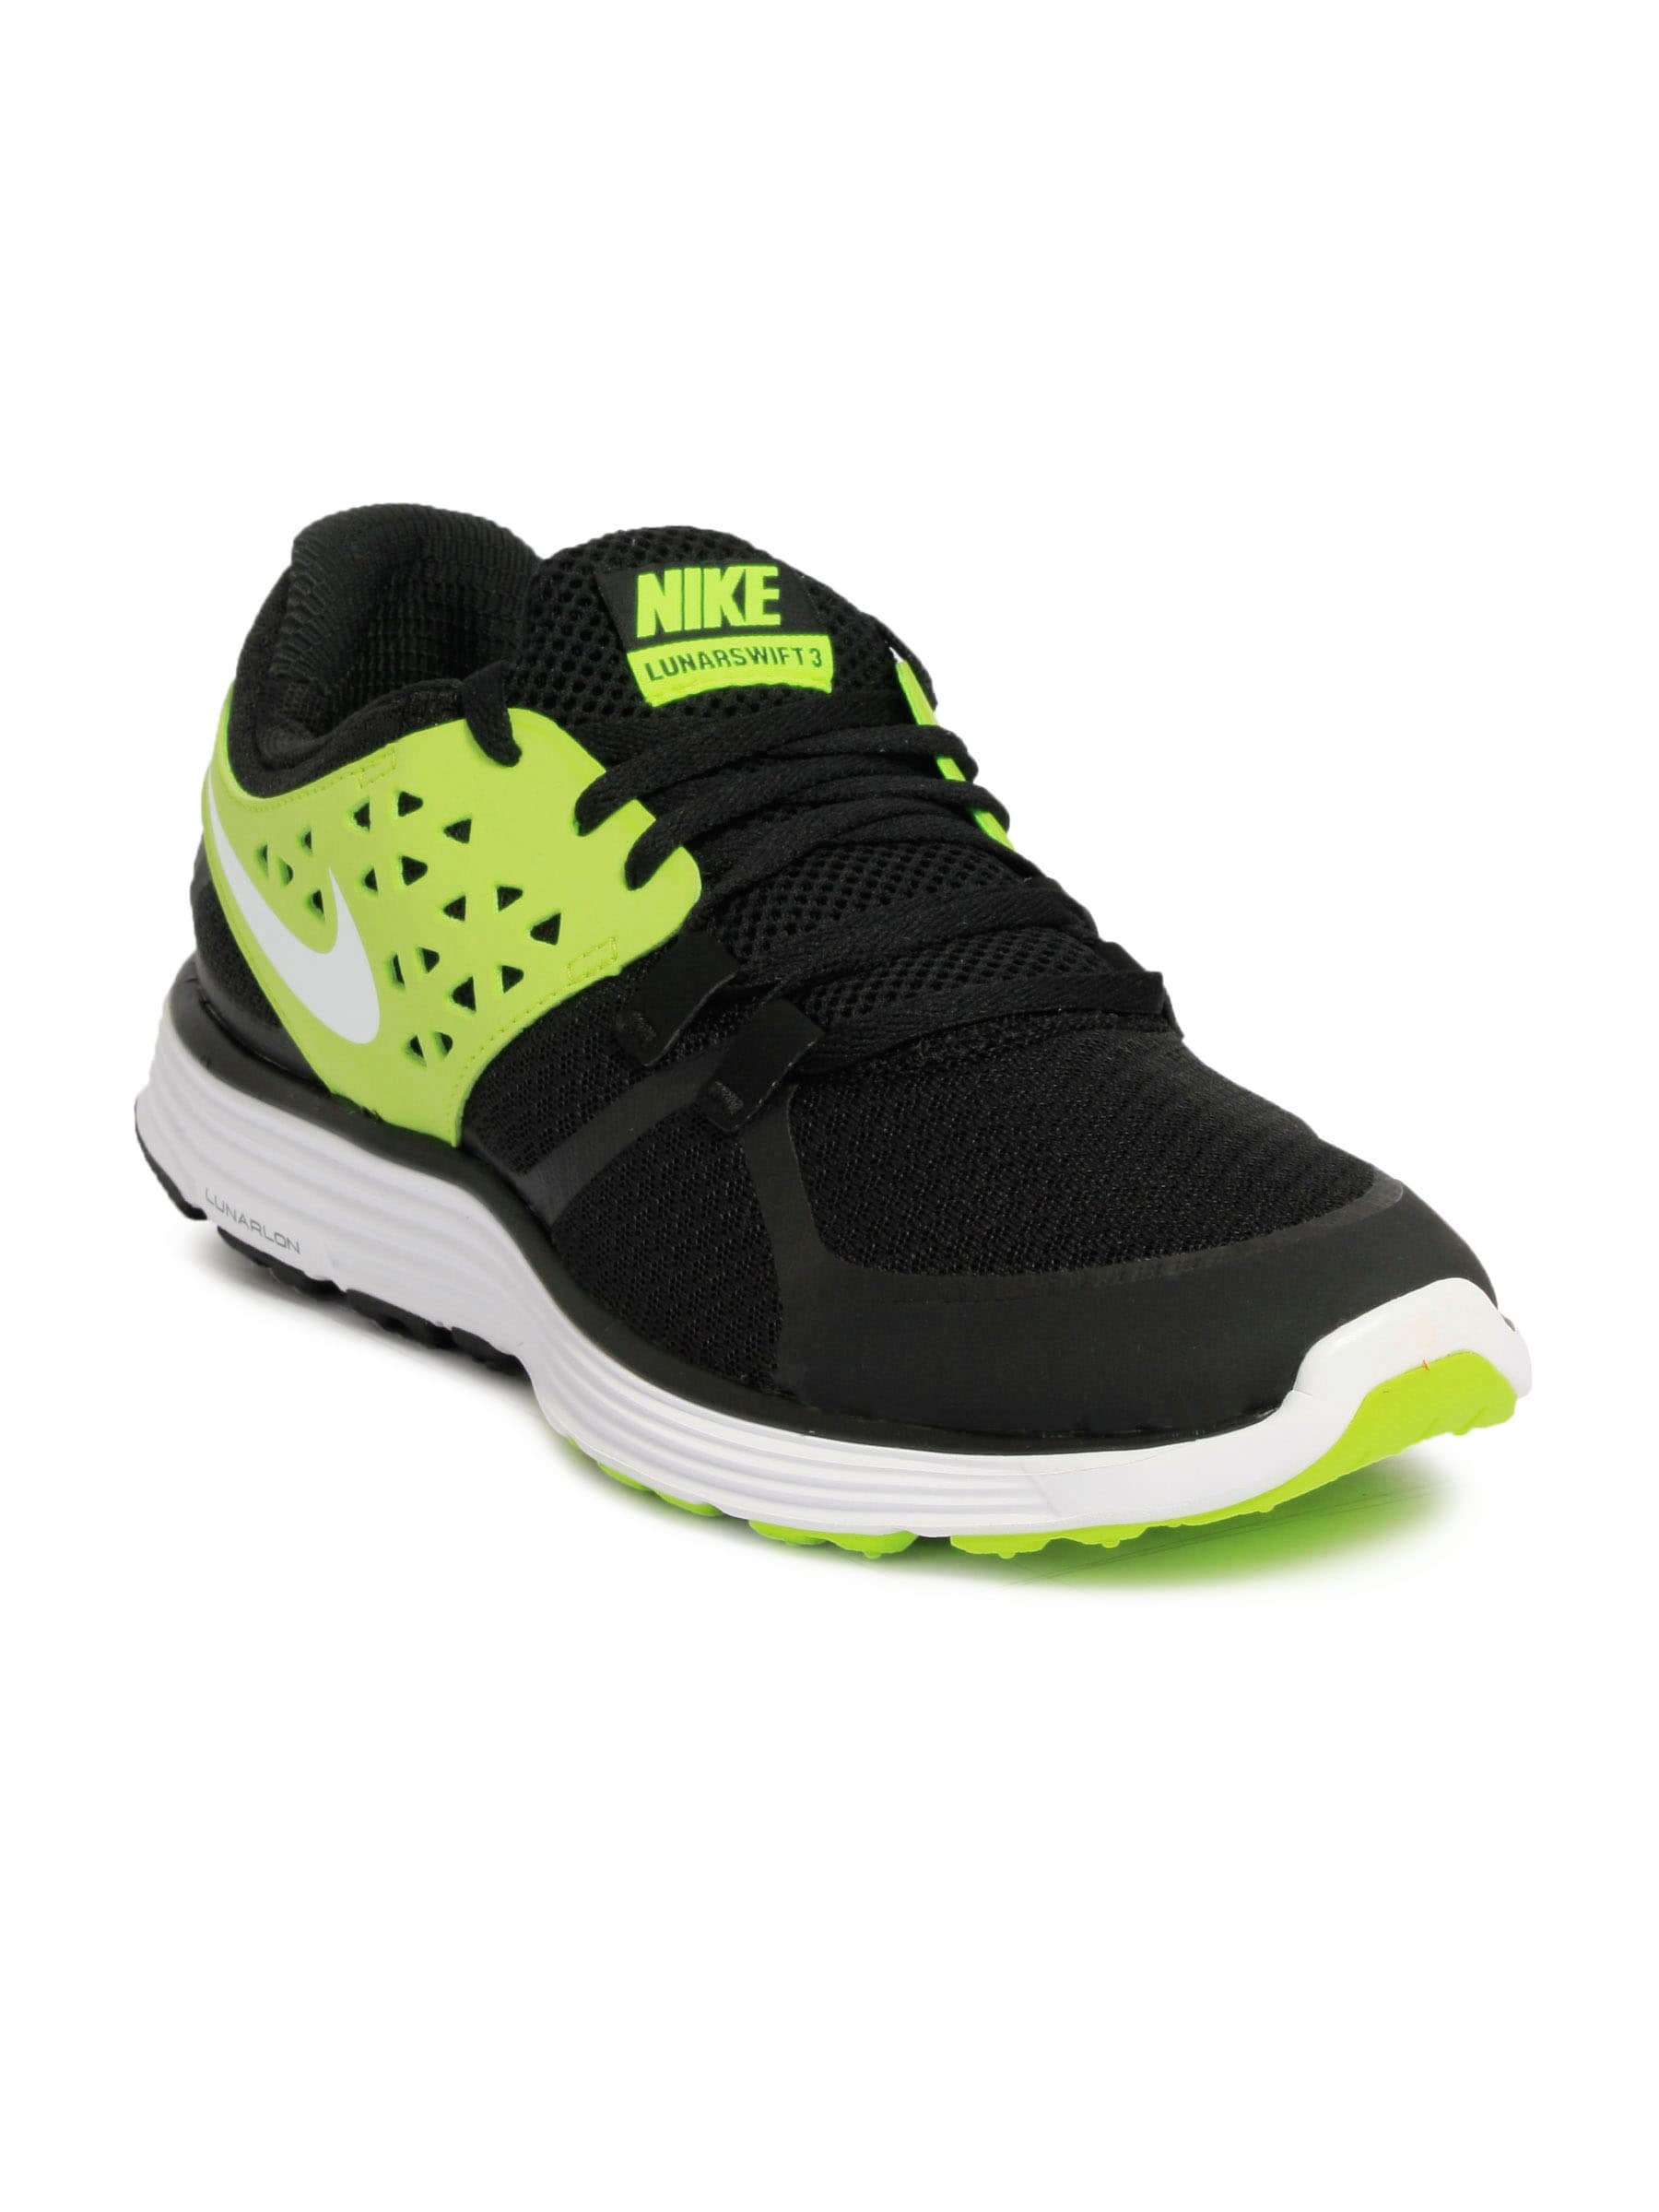 Nike Men Lunar Swift +3 Black Sports Shoes